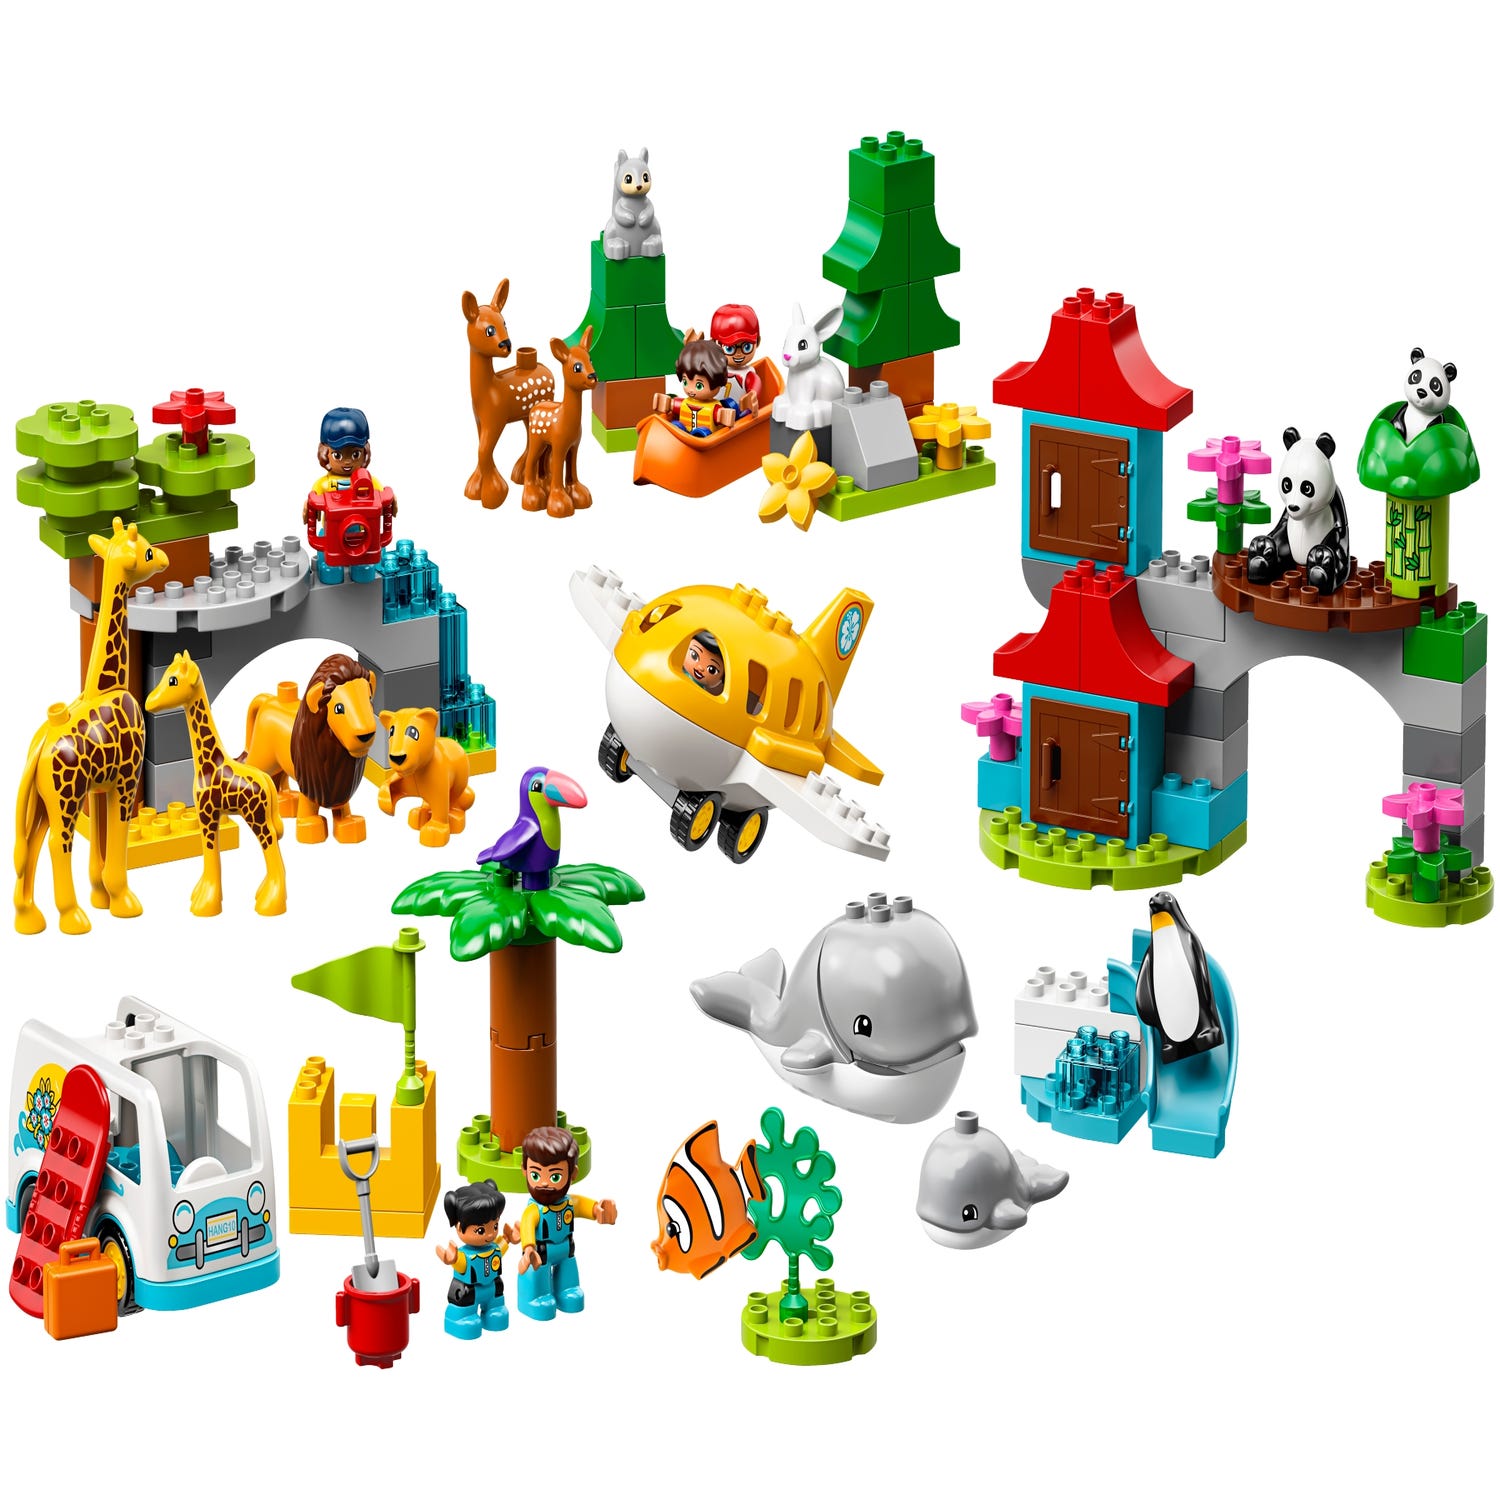 World 10907 | DUPLO® | Buy online at Official LEGO® Shop US